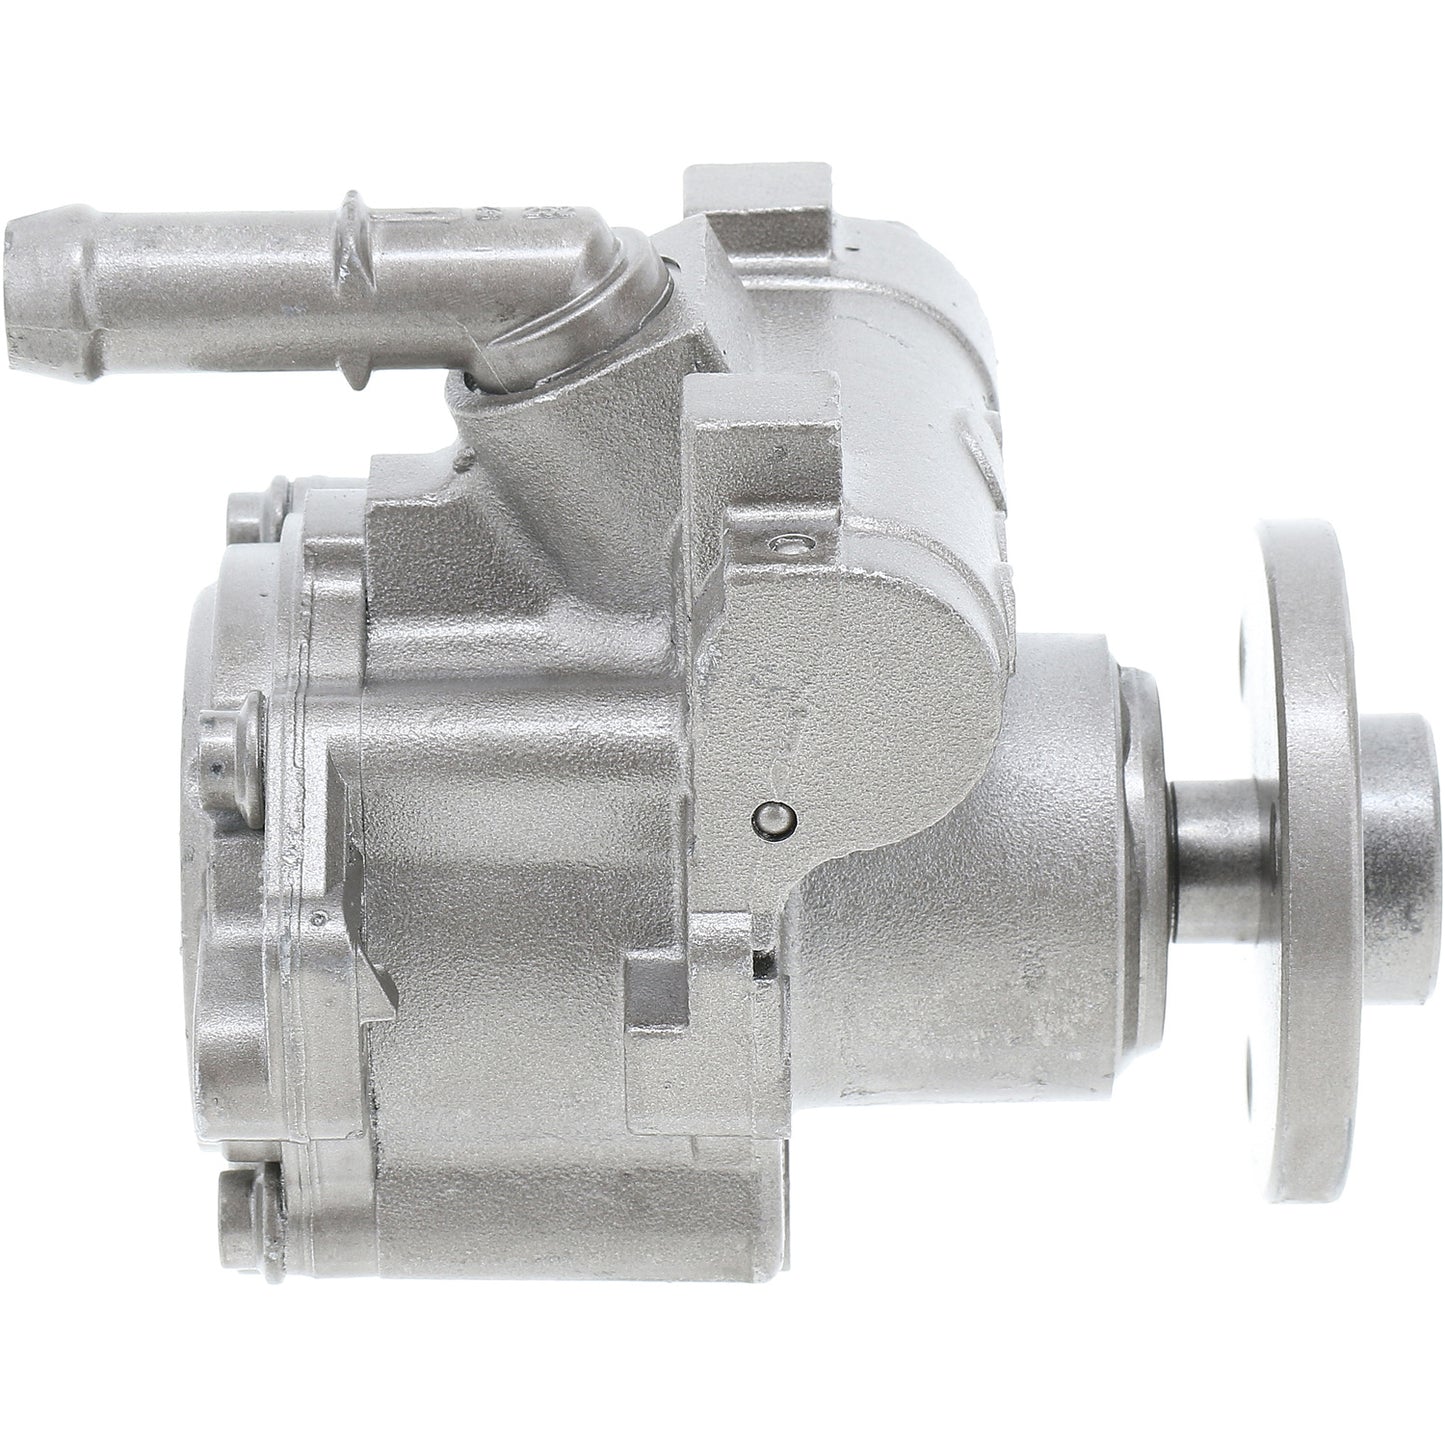 Power Steering Pump - MAVAL - Hydraulic Power - Remanufactured - 96660M